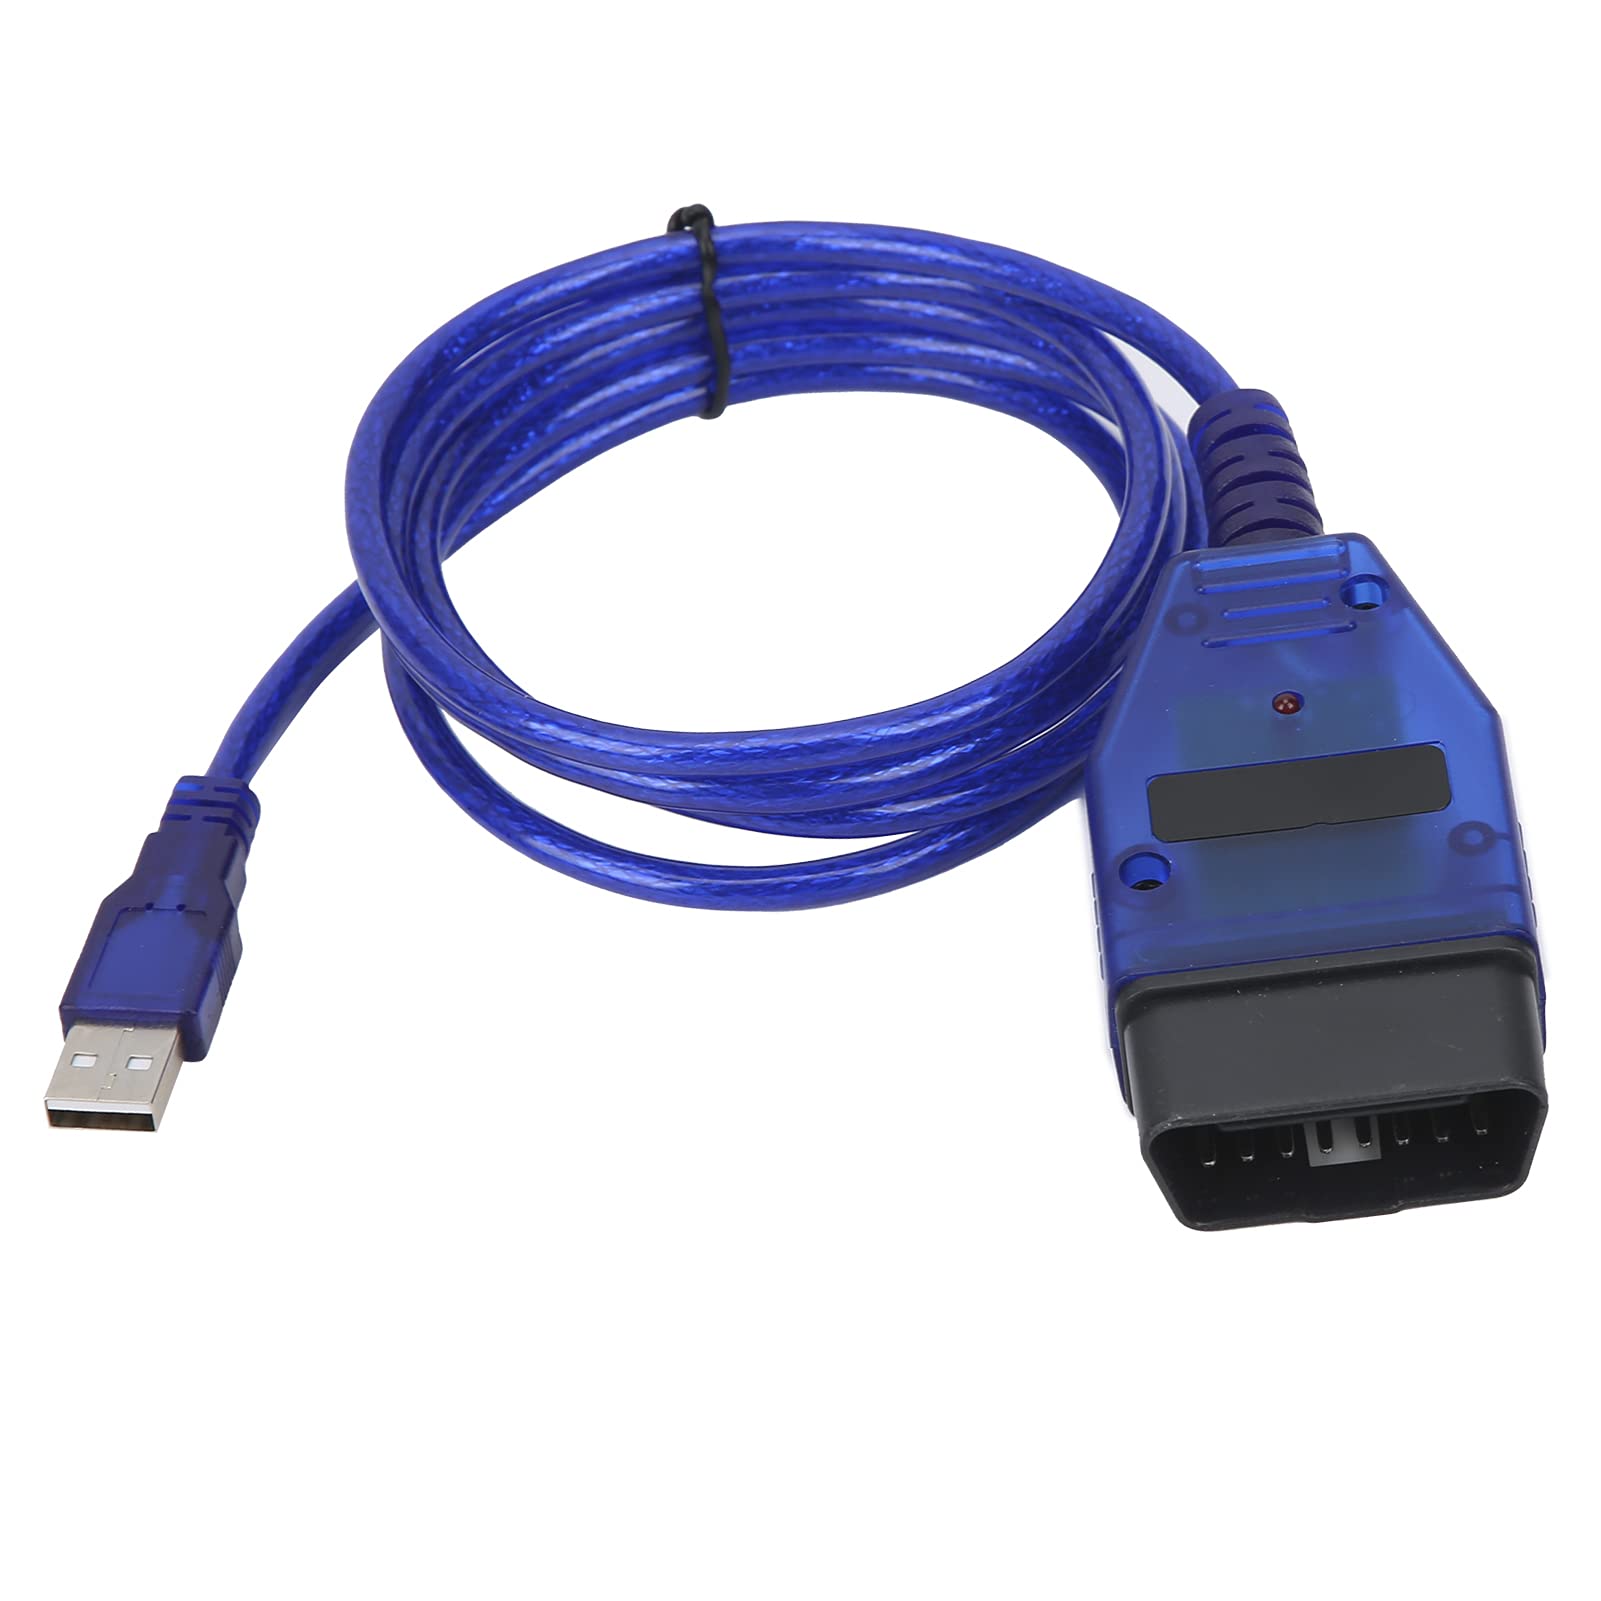 OBD2 USB Diagnosescanner Diagnose-Scan-Tool für Seat Alhambra/Altea/Arosa/Cordoba OBD2 Diagnose Kabel für einfache Fehlerdiagnose OBD-II Diagnosegerät für Automechaniker von Ejoyous